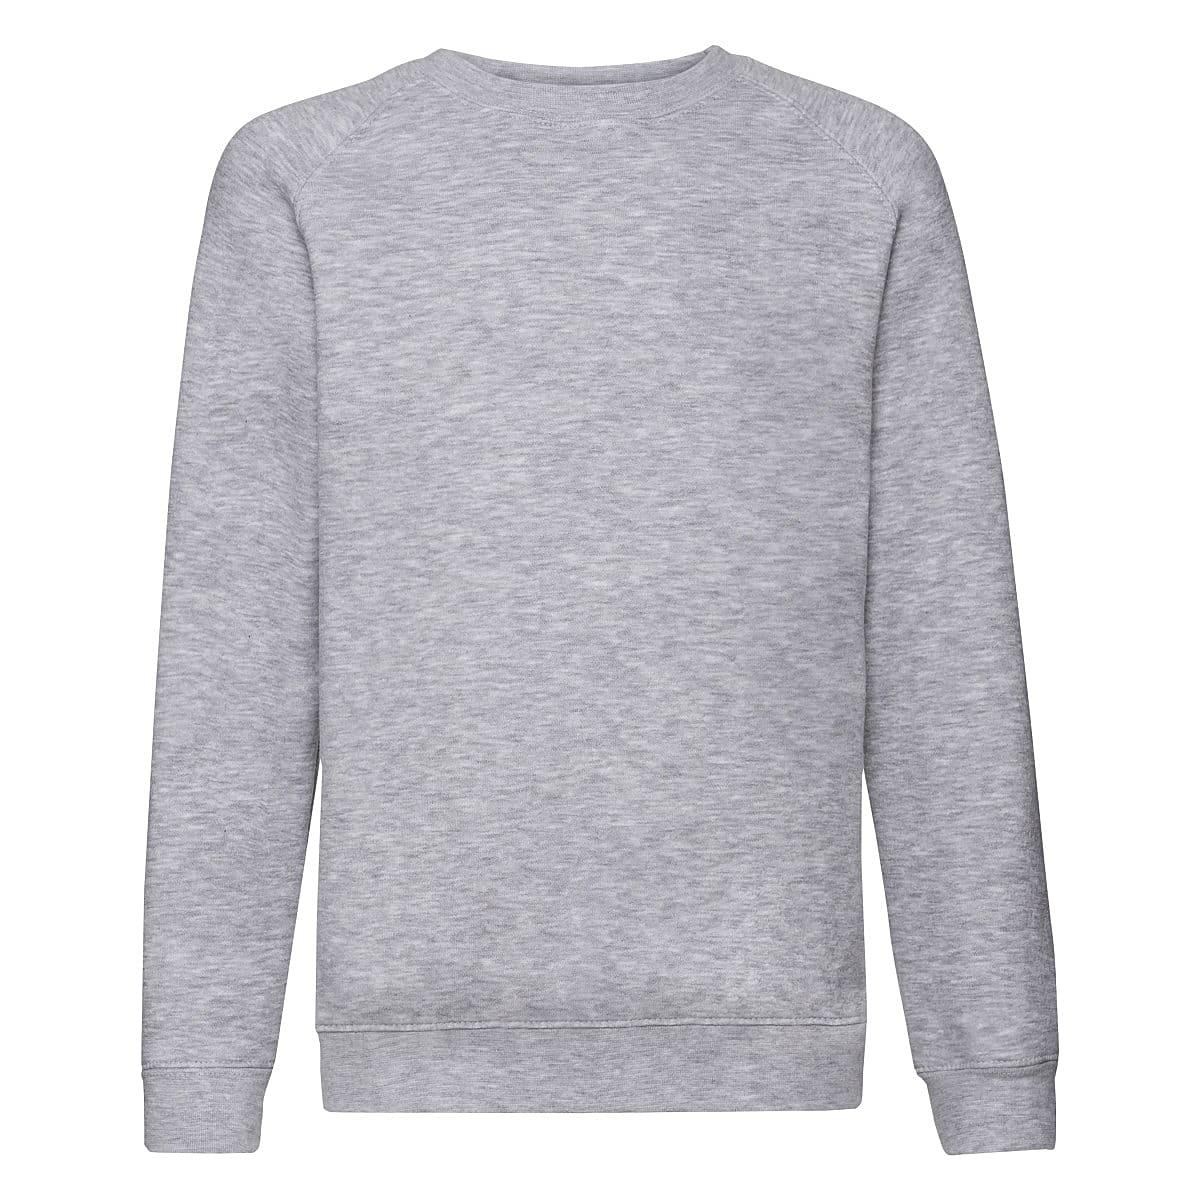 Fruit Of The Loom Childrens Premium Raglan Sleeve Sweatshirt in Heather Grey (Product Code: 62033)